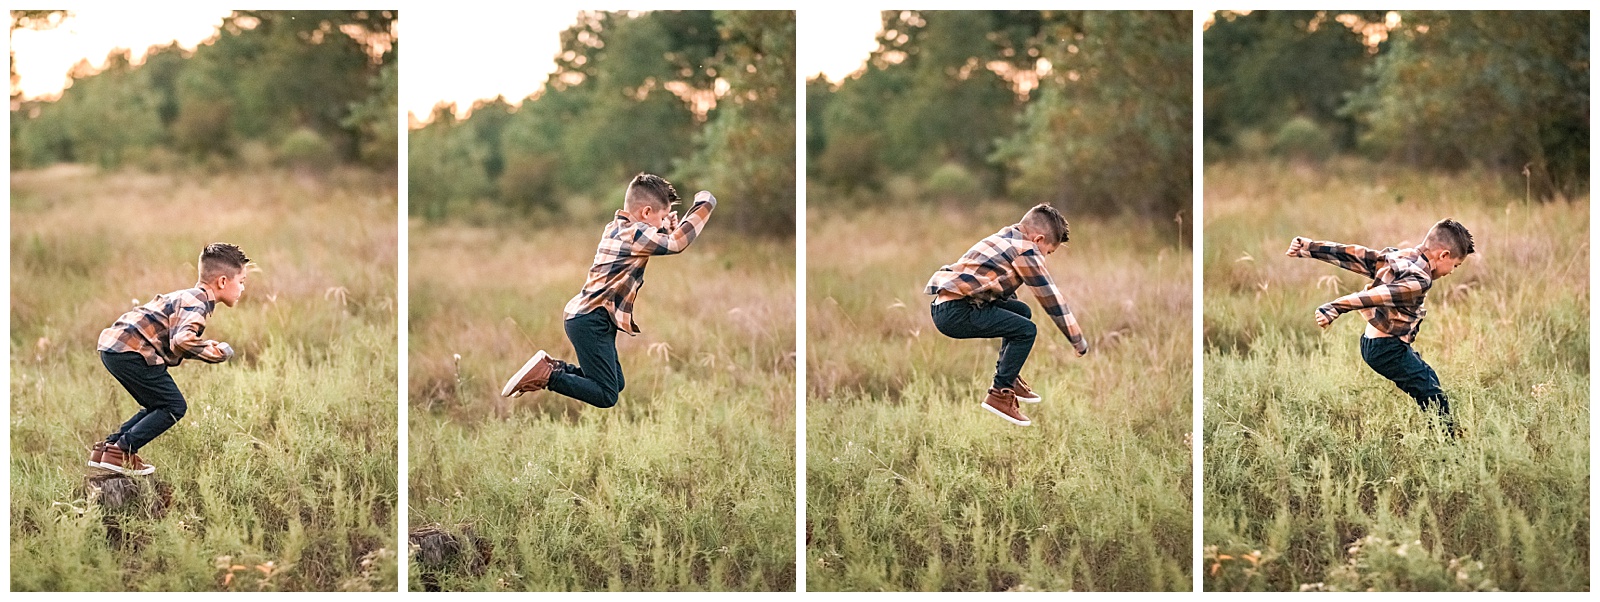 fun photo shots of boys jumping